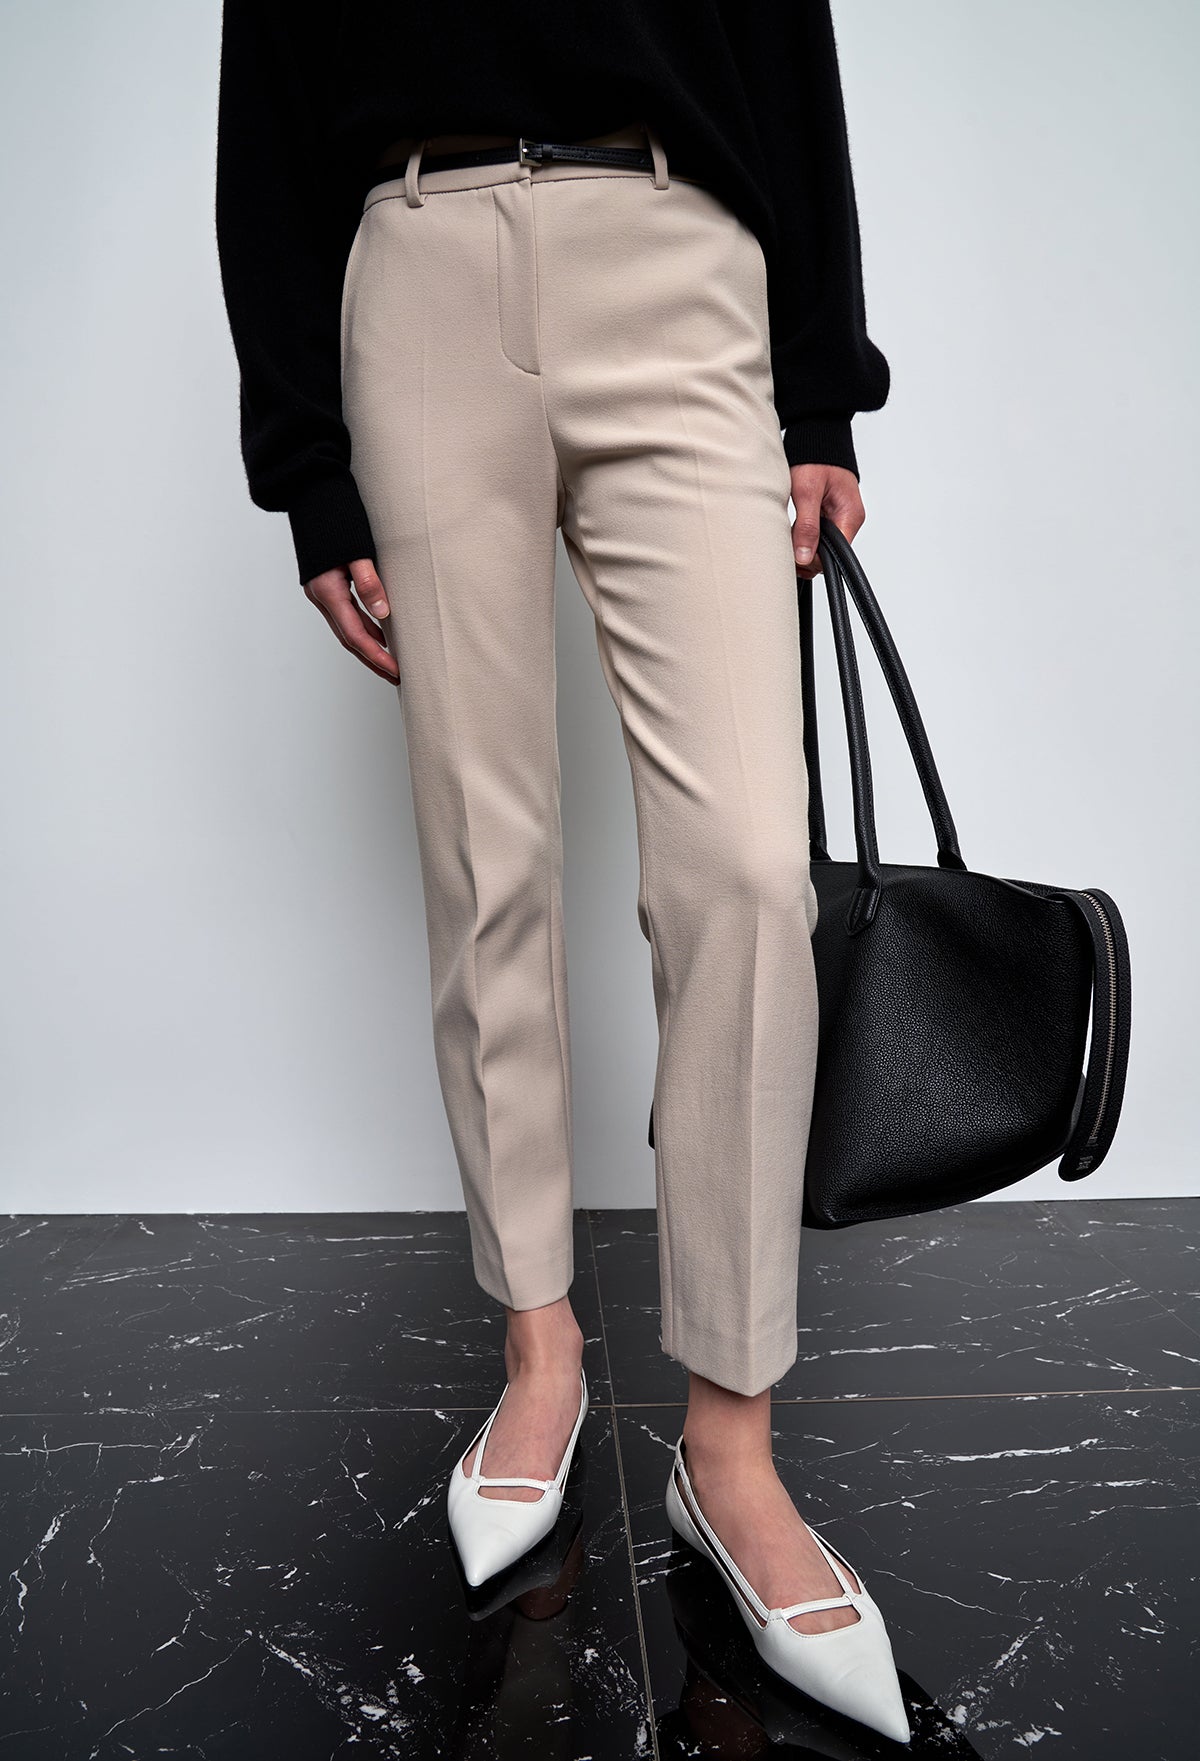 Hart Schaffner Marx New York Fit Flat Front Solid Dress Pants | Dillard's